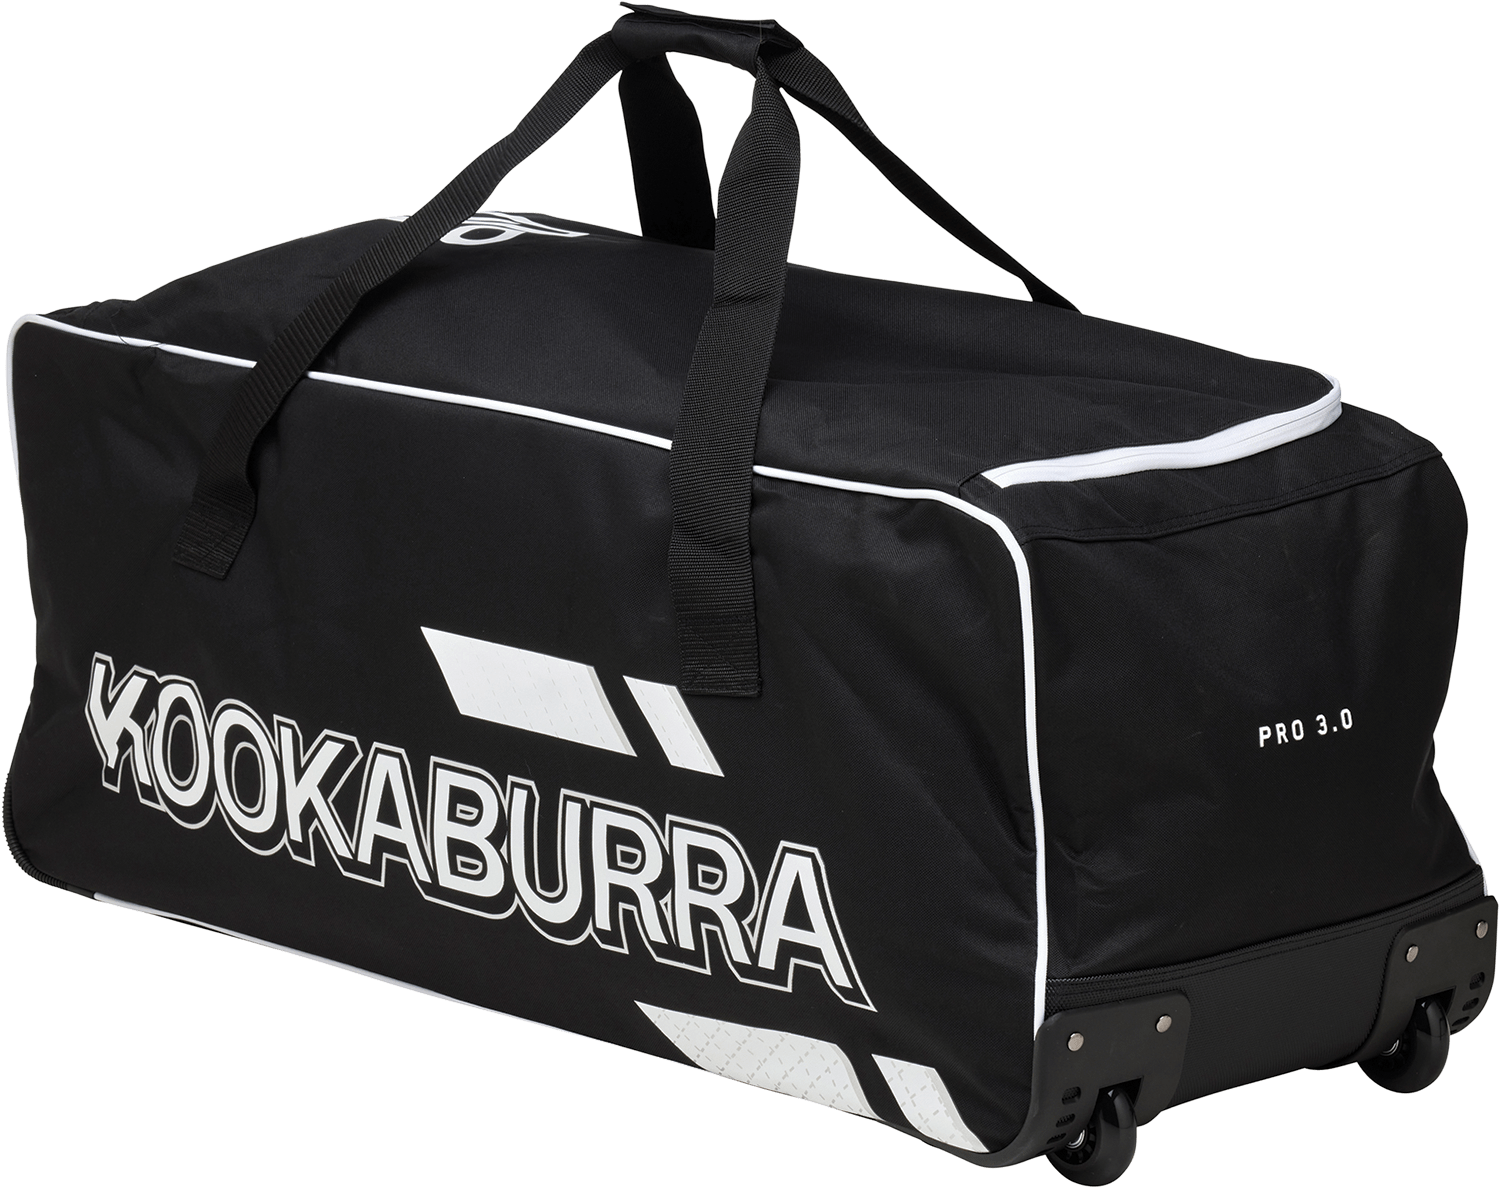 Kookaburra Cricket Bags White Kookaburra 3.0 Wheelie Cricket Bag